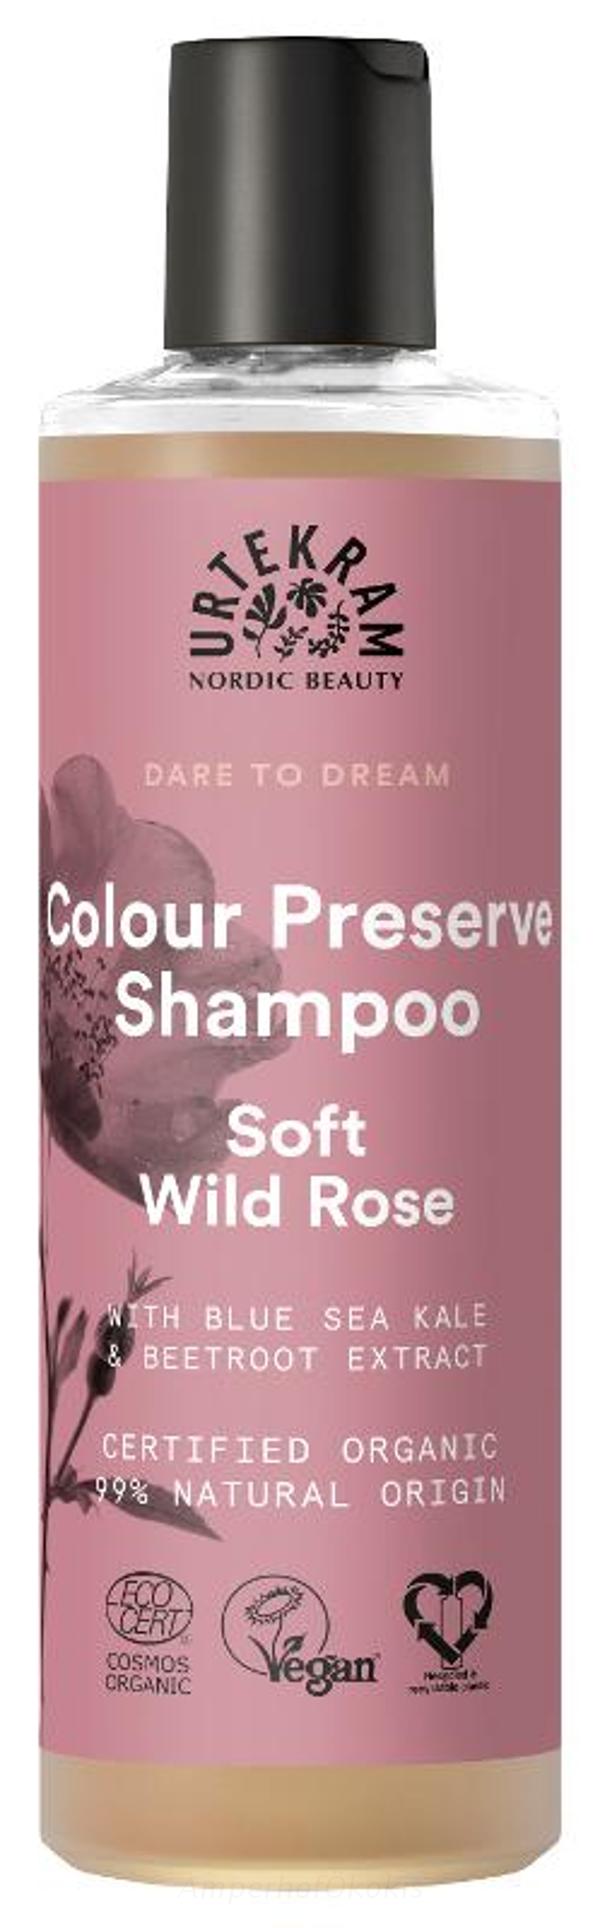 Produktfoto zu Shampoo Soft Wild Rose 250 g